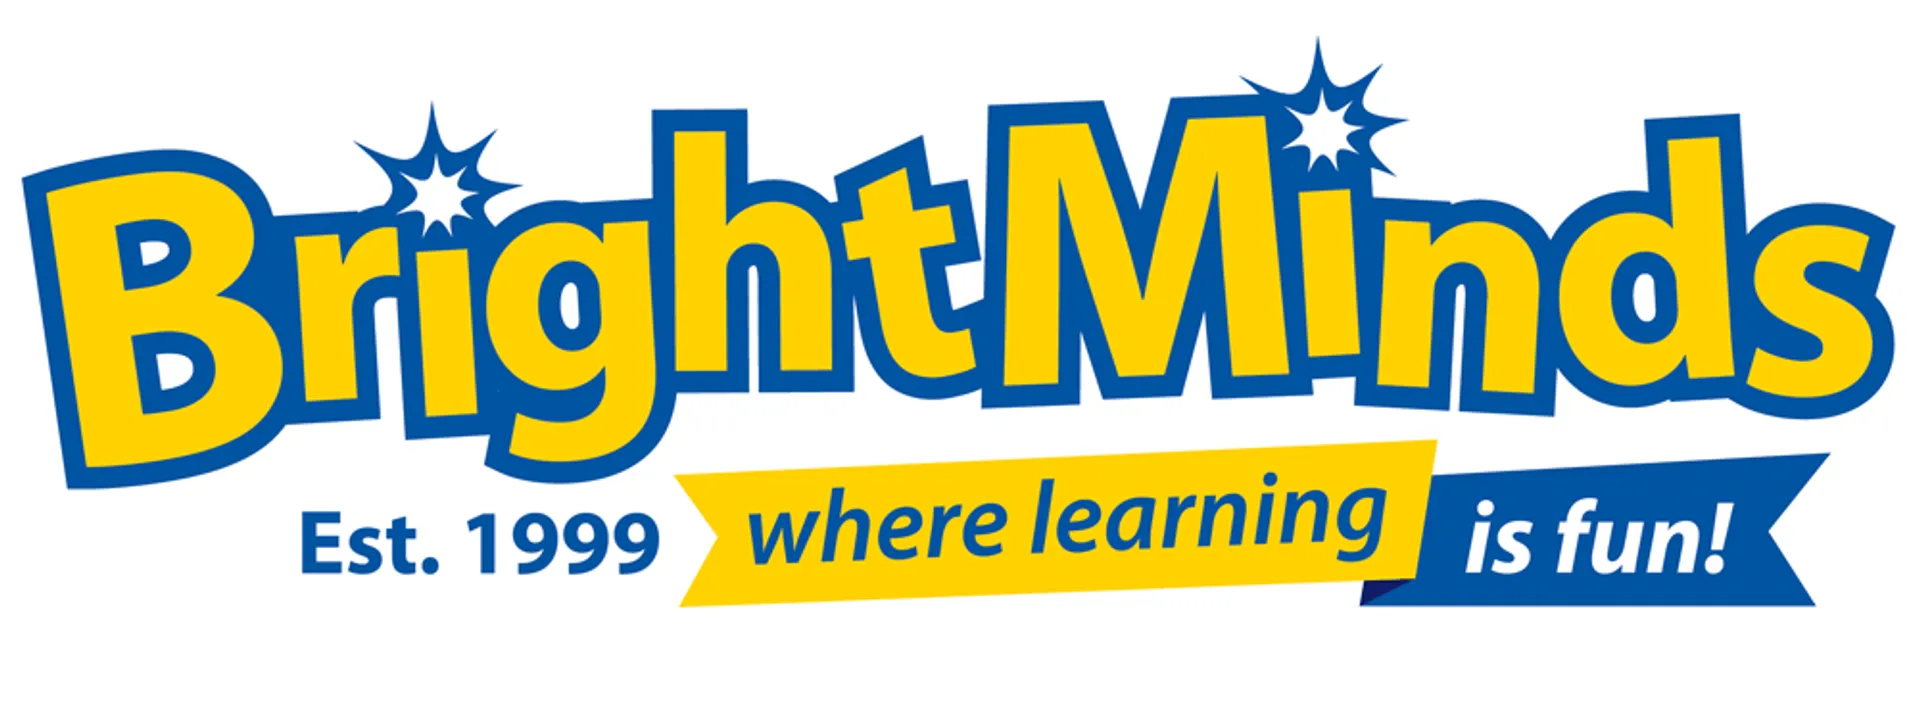 BRIGHT MINDS logo. Current catalogue